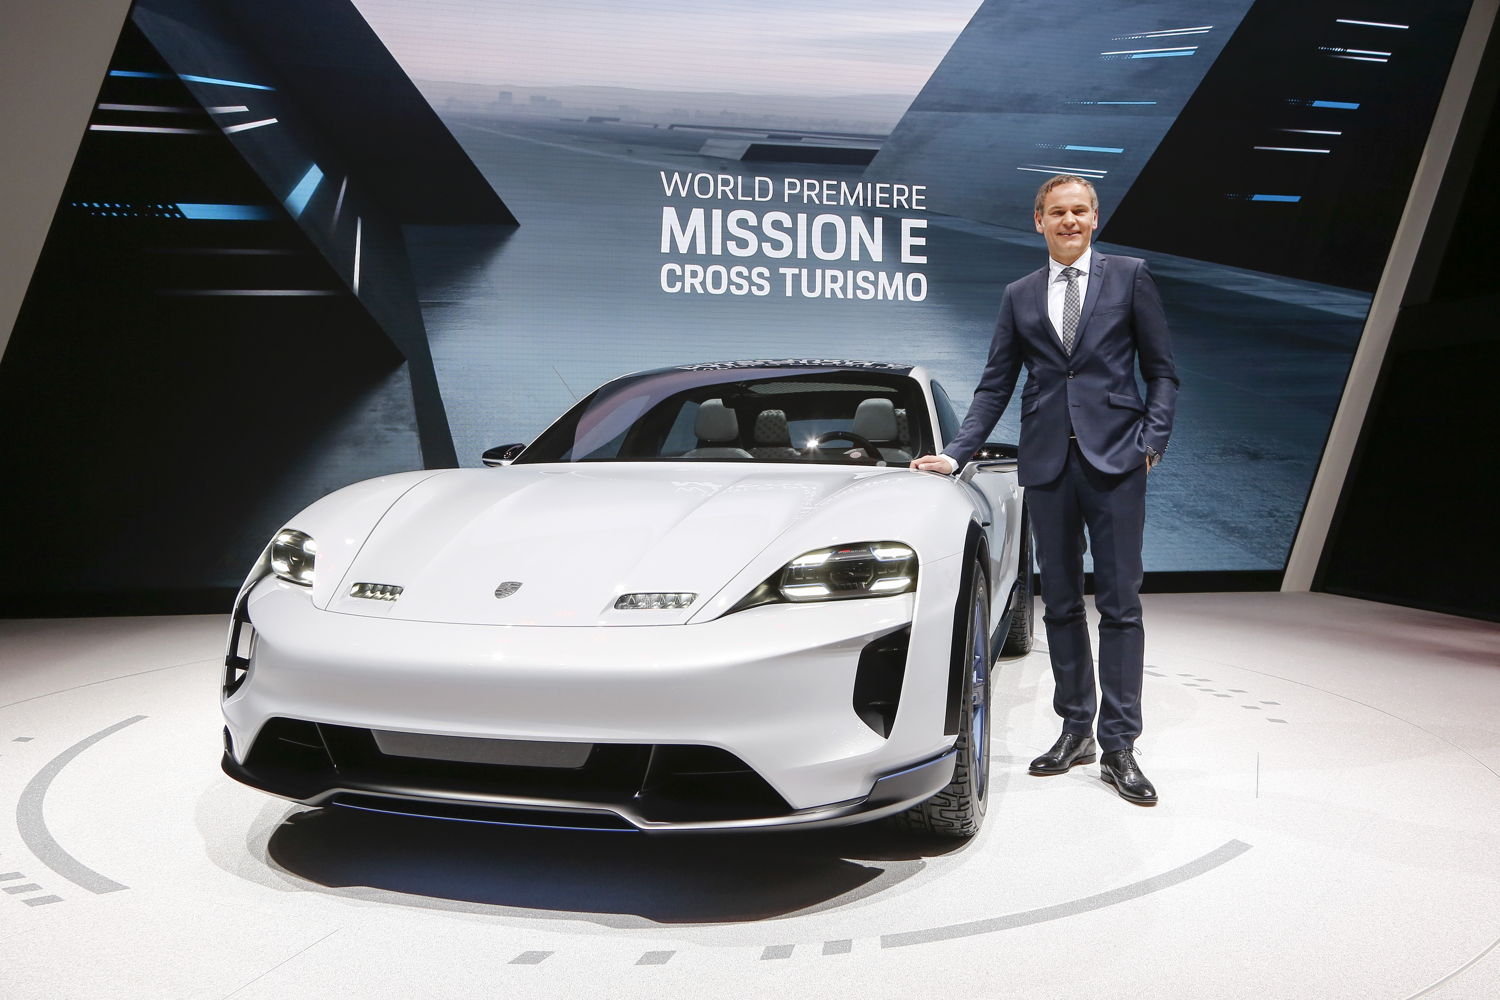 Salón del Automóvil de Ginebra 2018: Oliver Blume, Presidente del Consejo Directivo de Porsche AG, presentando el estudio conceptual Mission E Cross Turismo